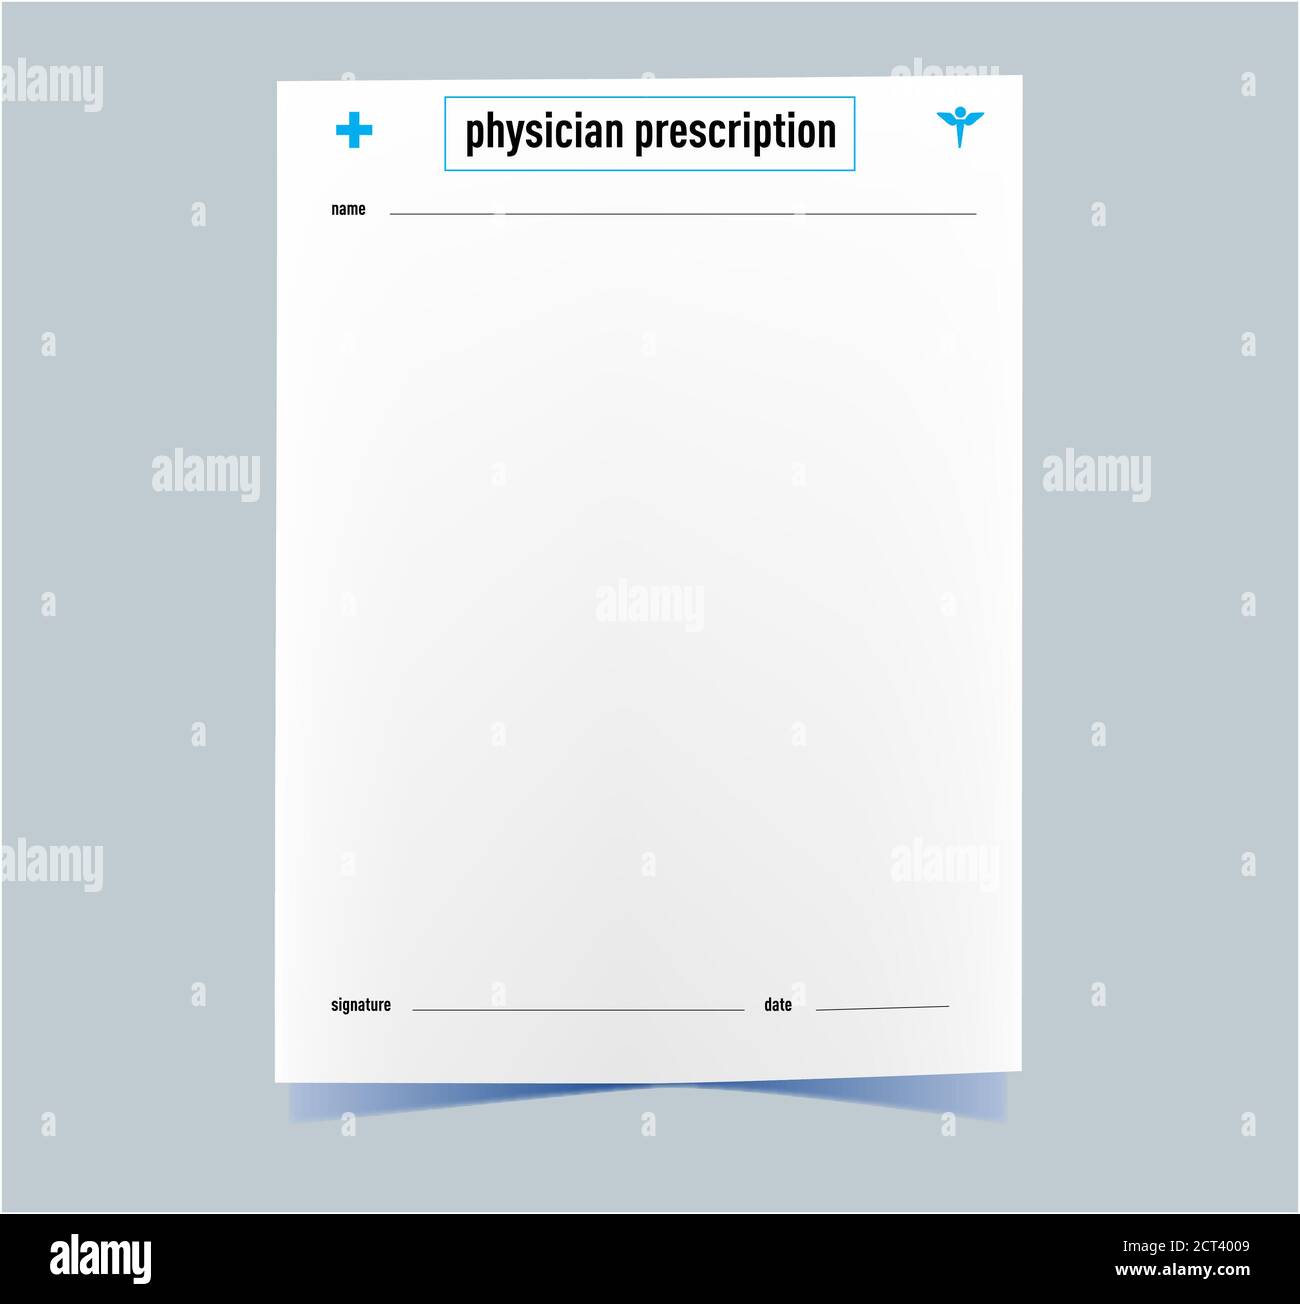 physician prescription Medicine form rx prescription icon on a curved sheet of paper Stock Photo